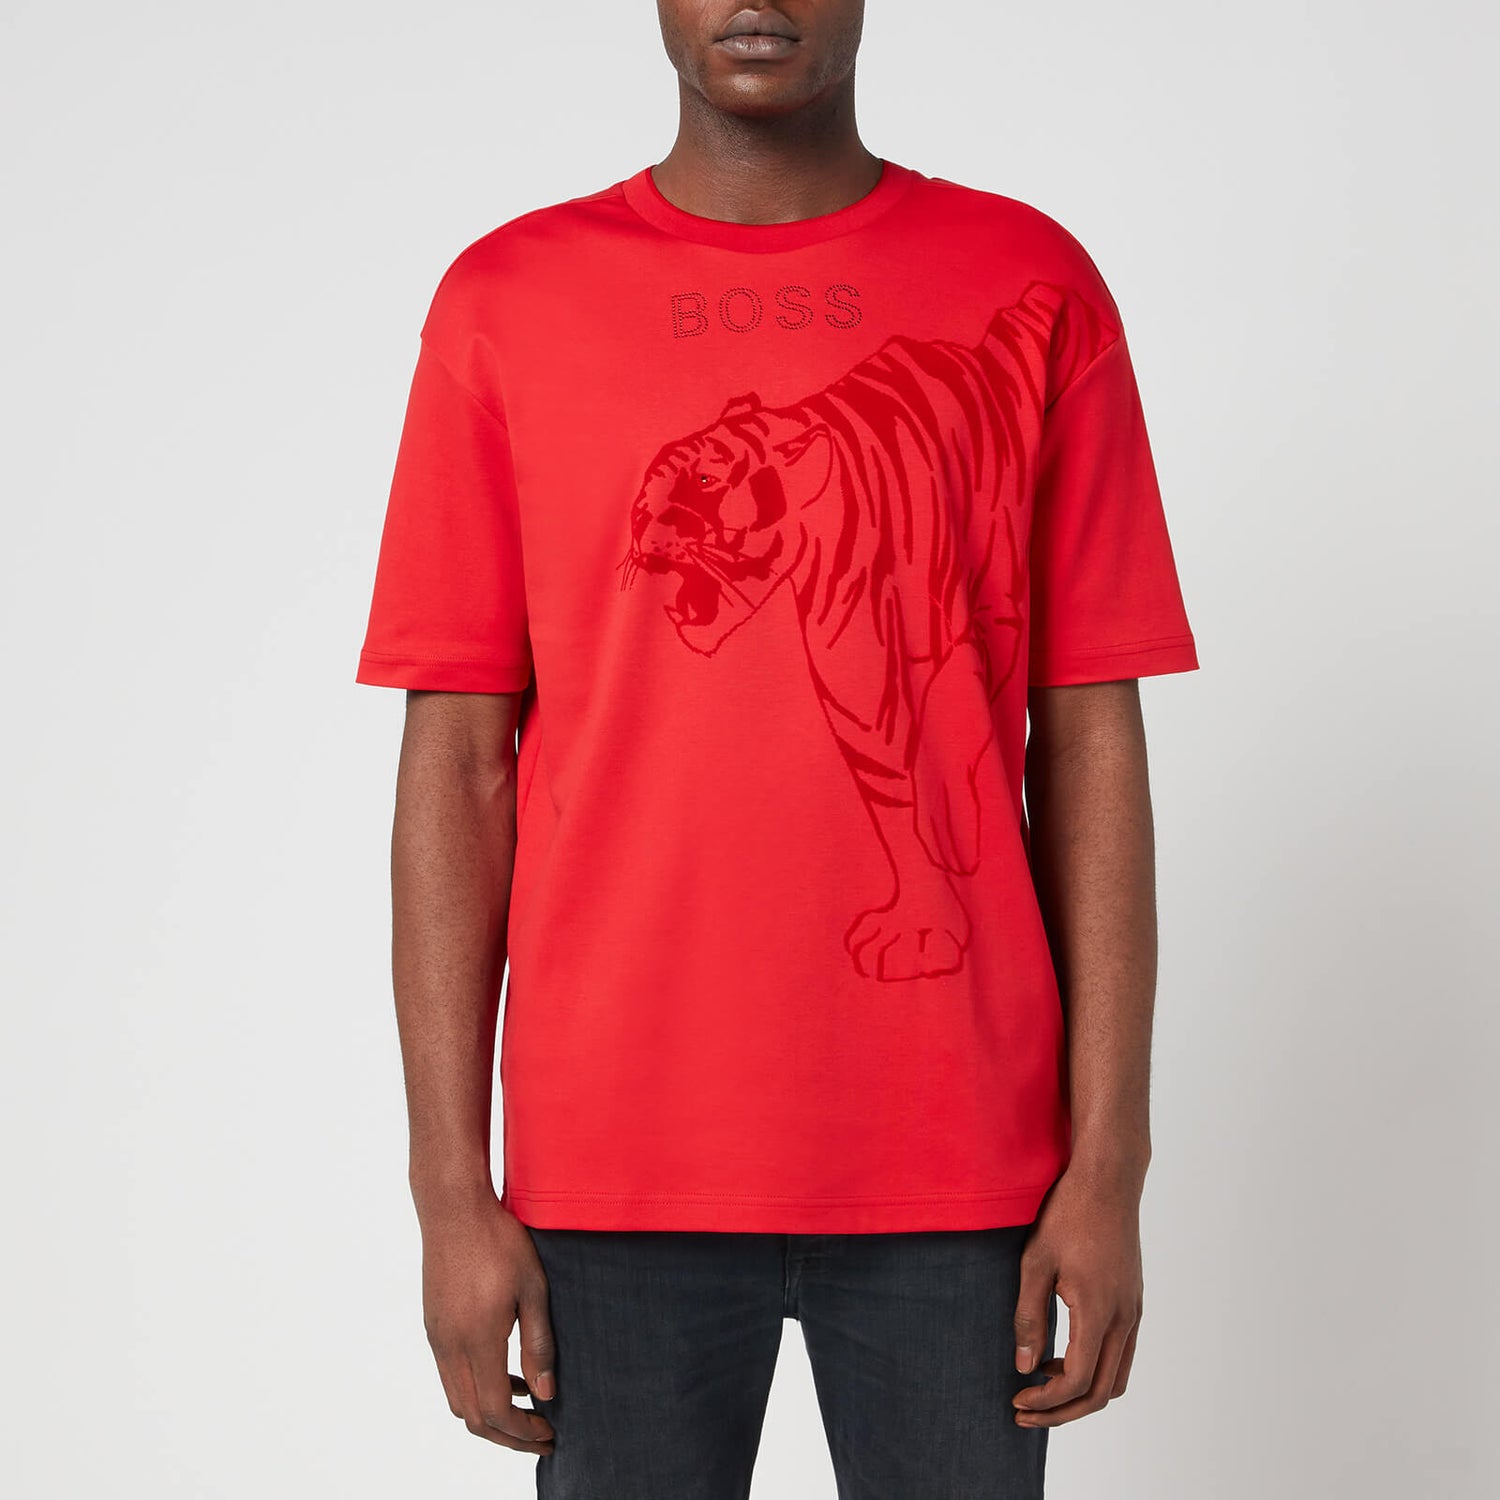 BOSS Green Men's Iconic T-Shirt - Bright Red - M